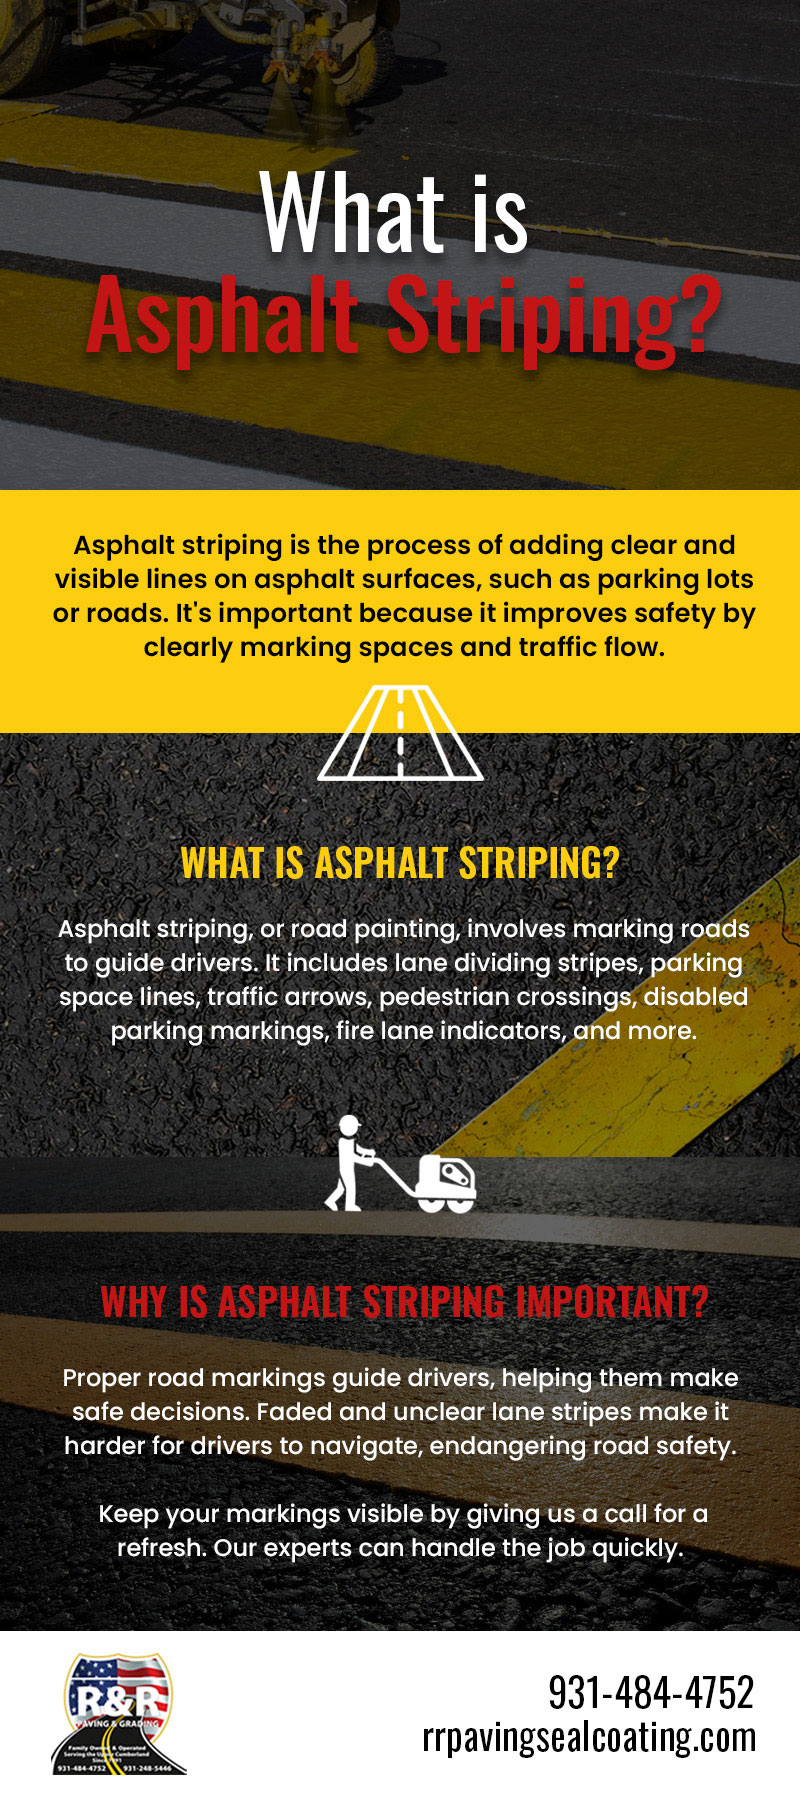 What is Asphalt Striping?